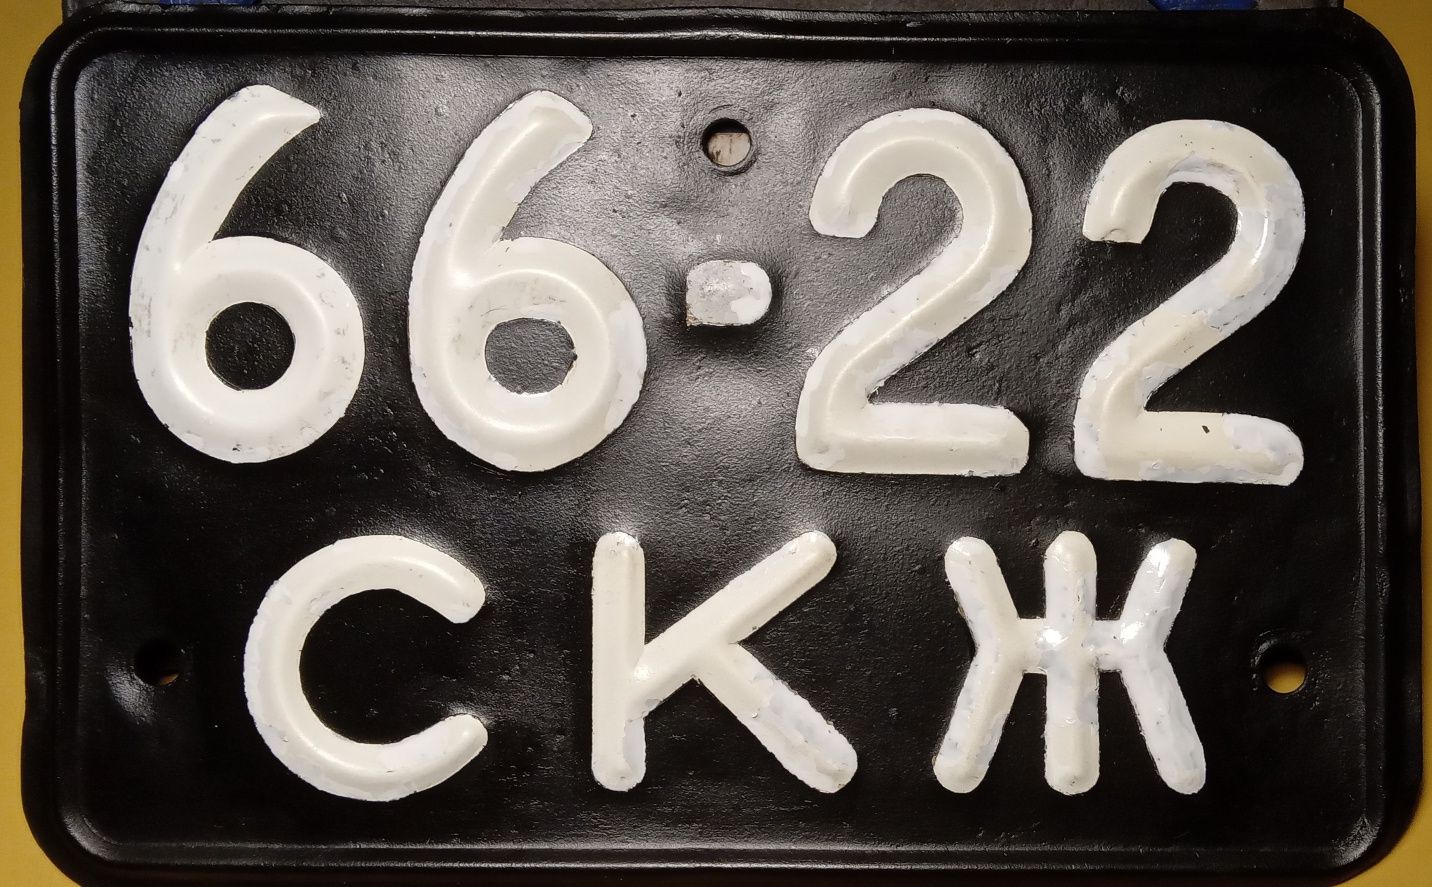 Спидометр и номерной знак от М - 72 , ИЖ - 49.